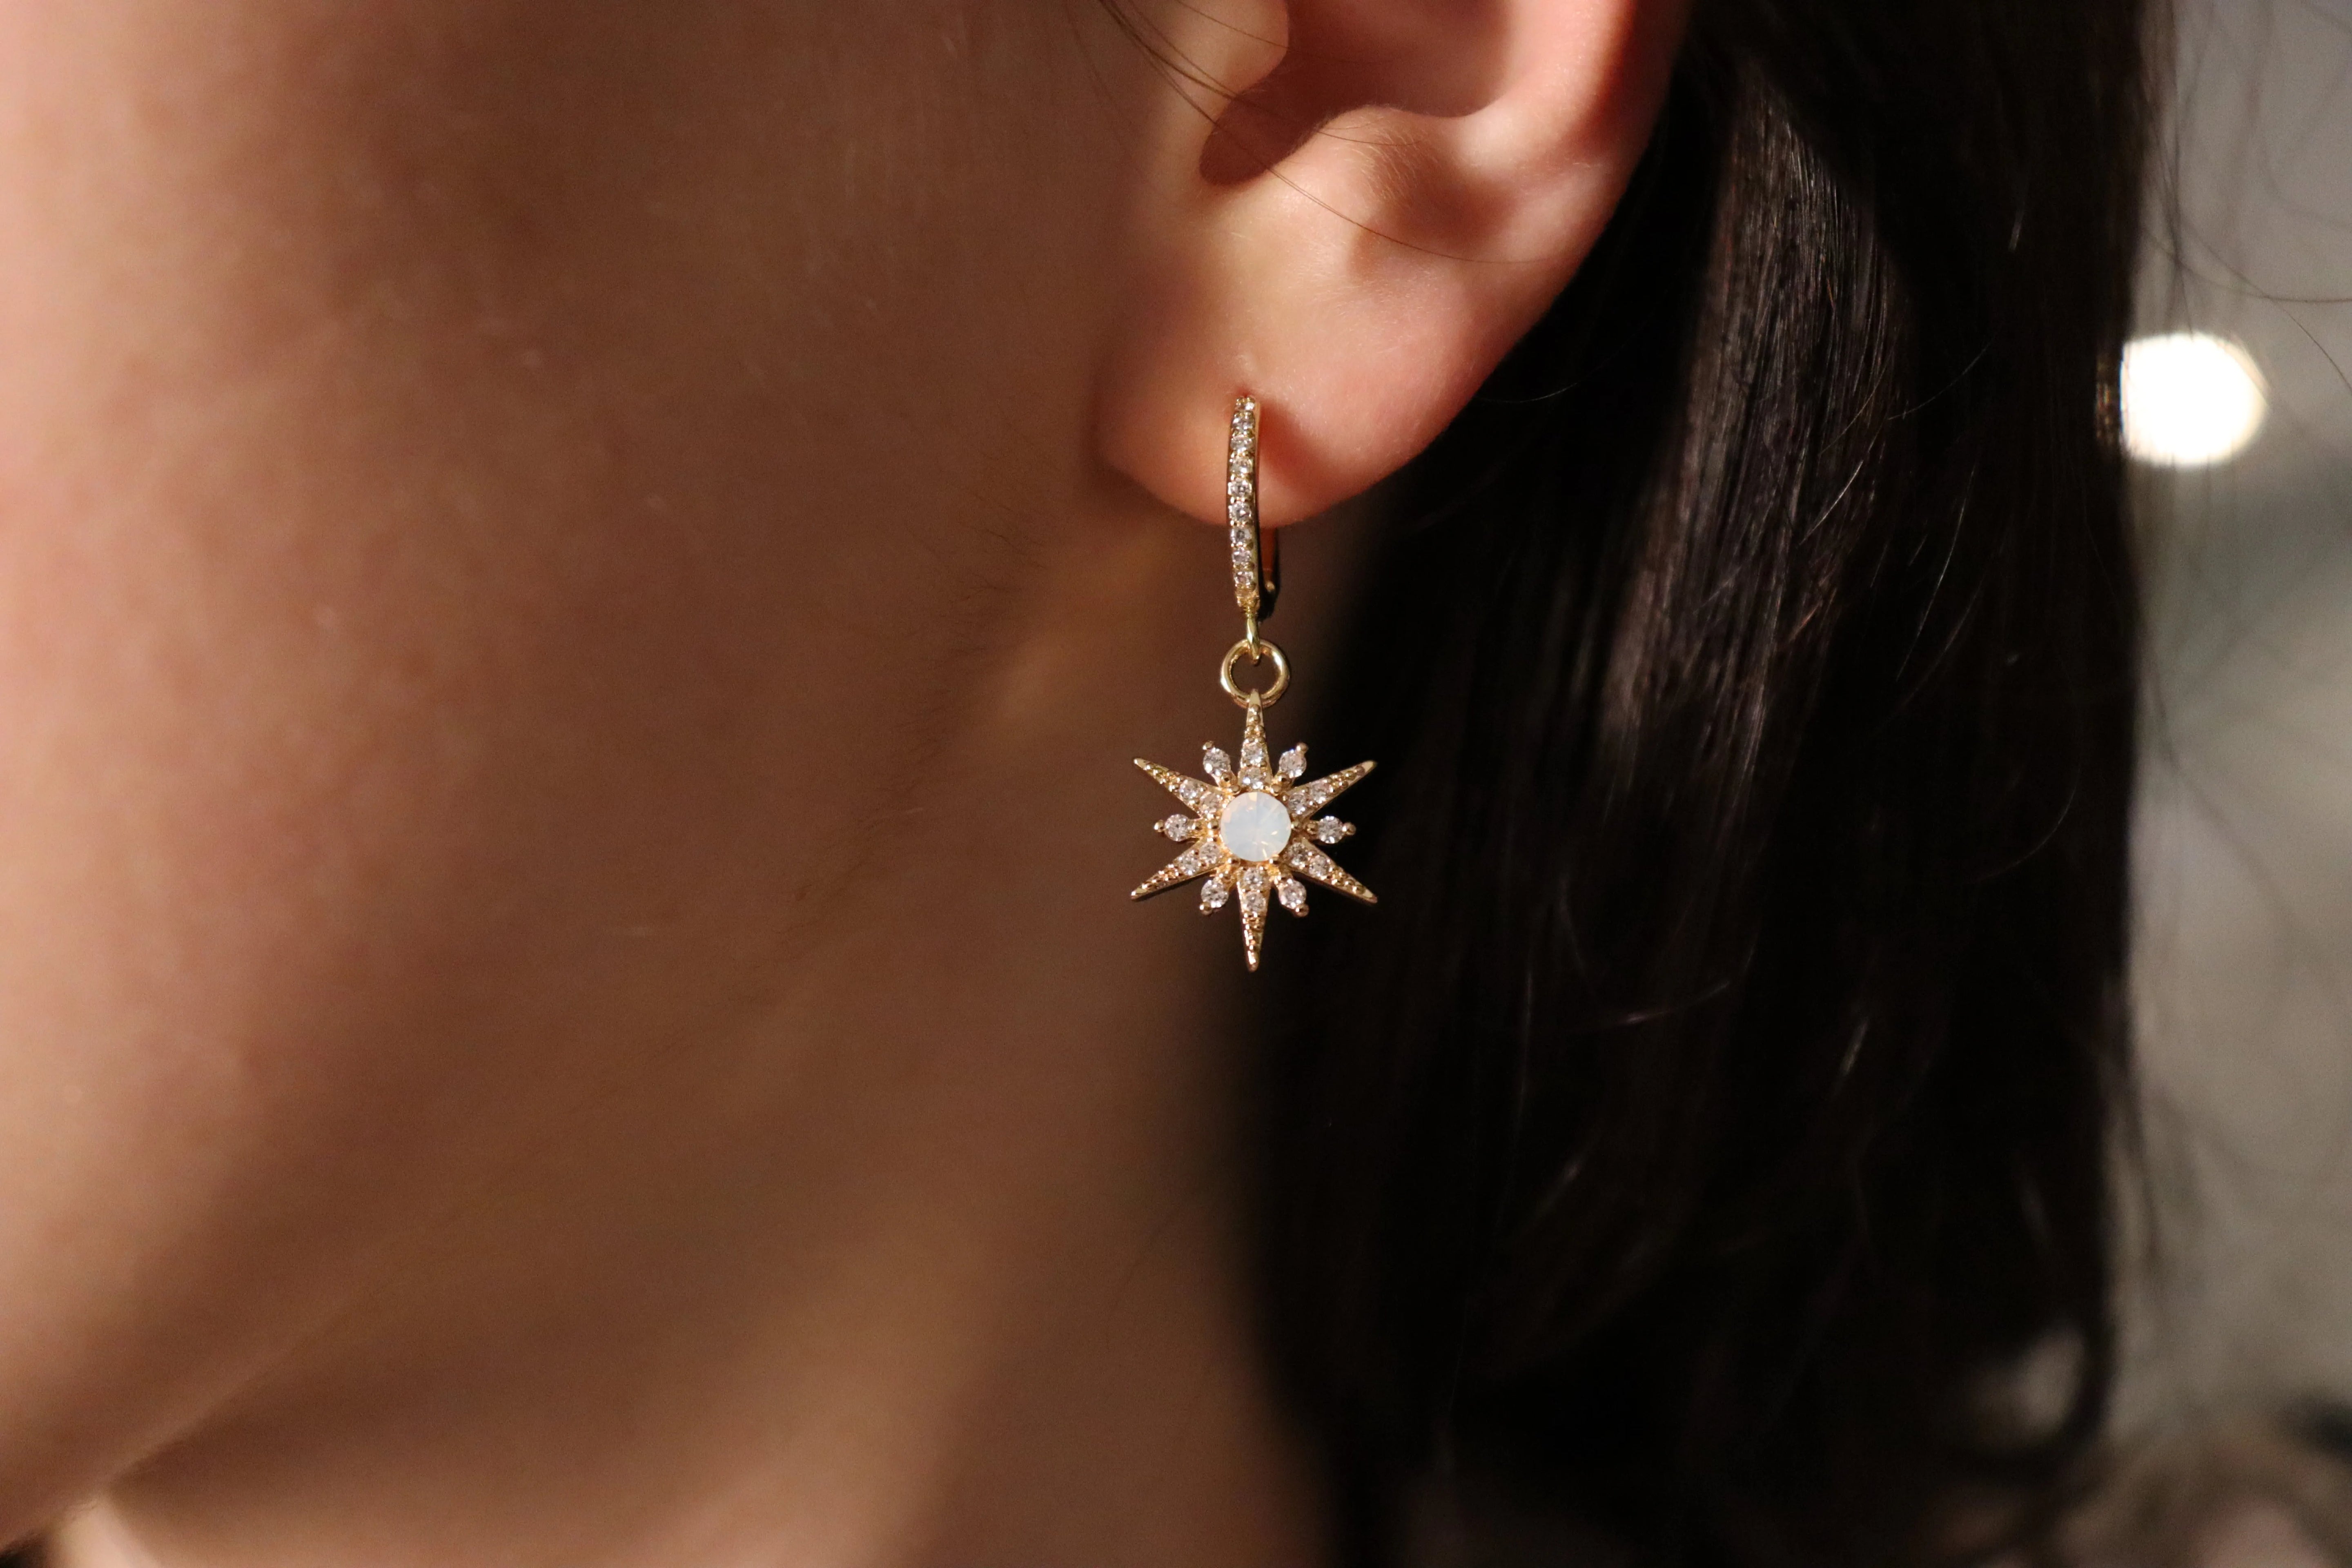 Star Burst Opal Earrings product images.